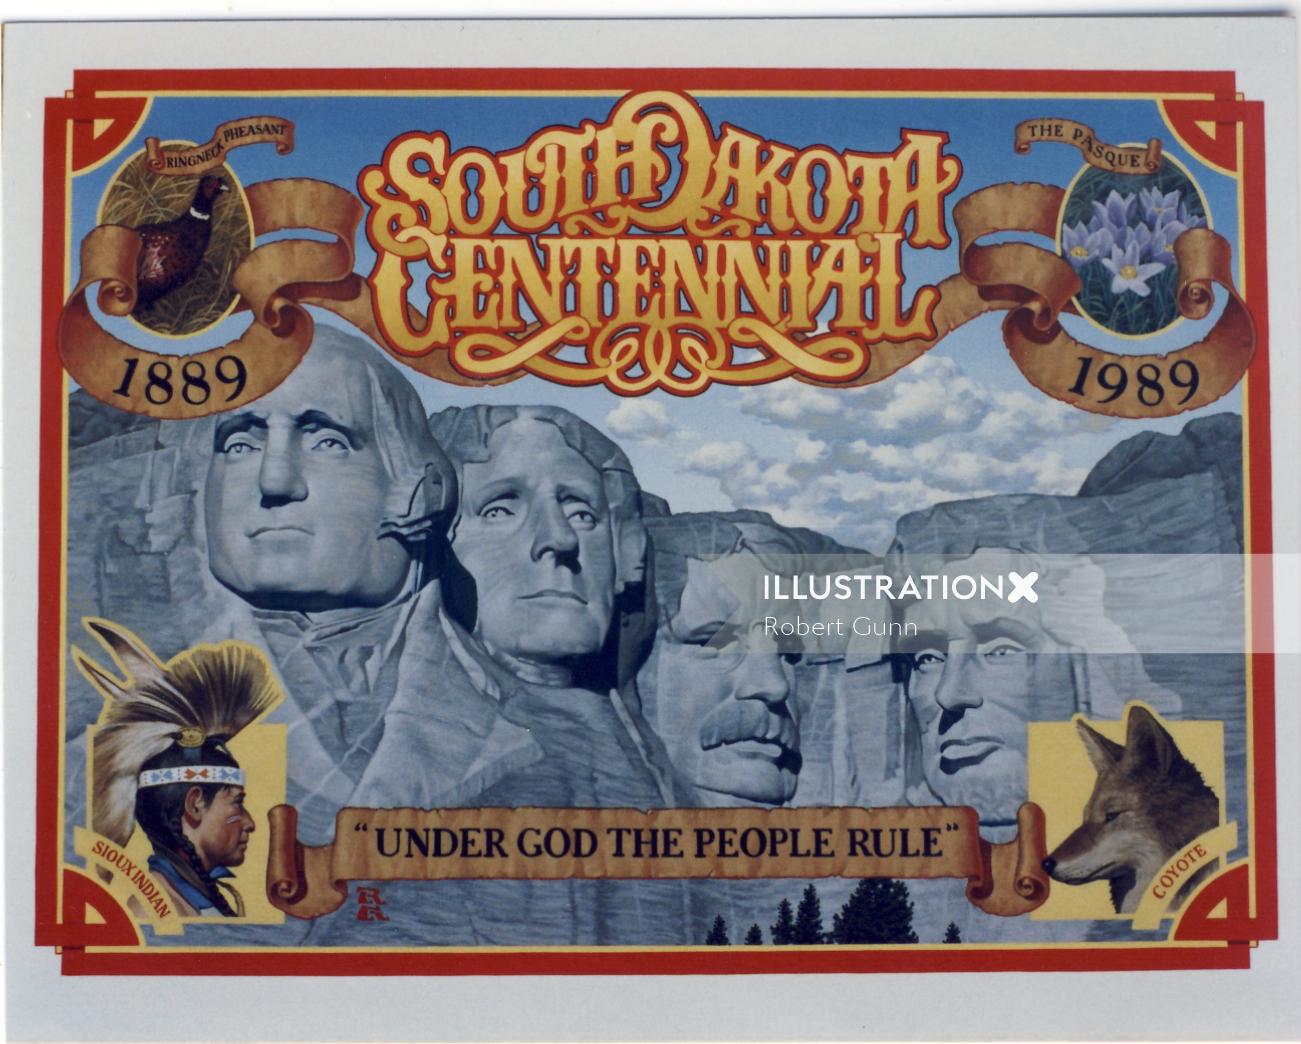 Promotional poster in celebrating South Dakota's centennial